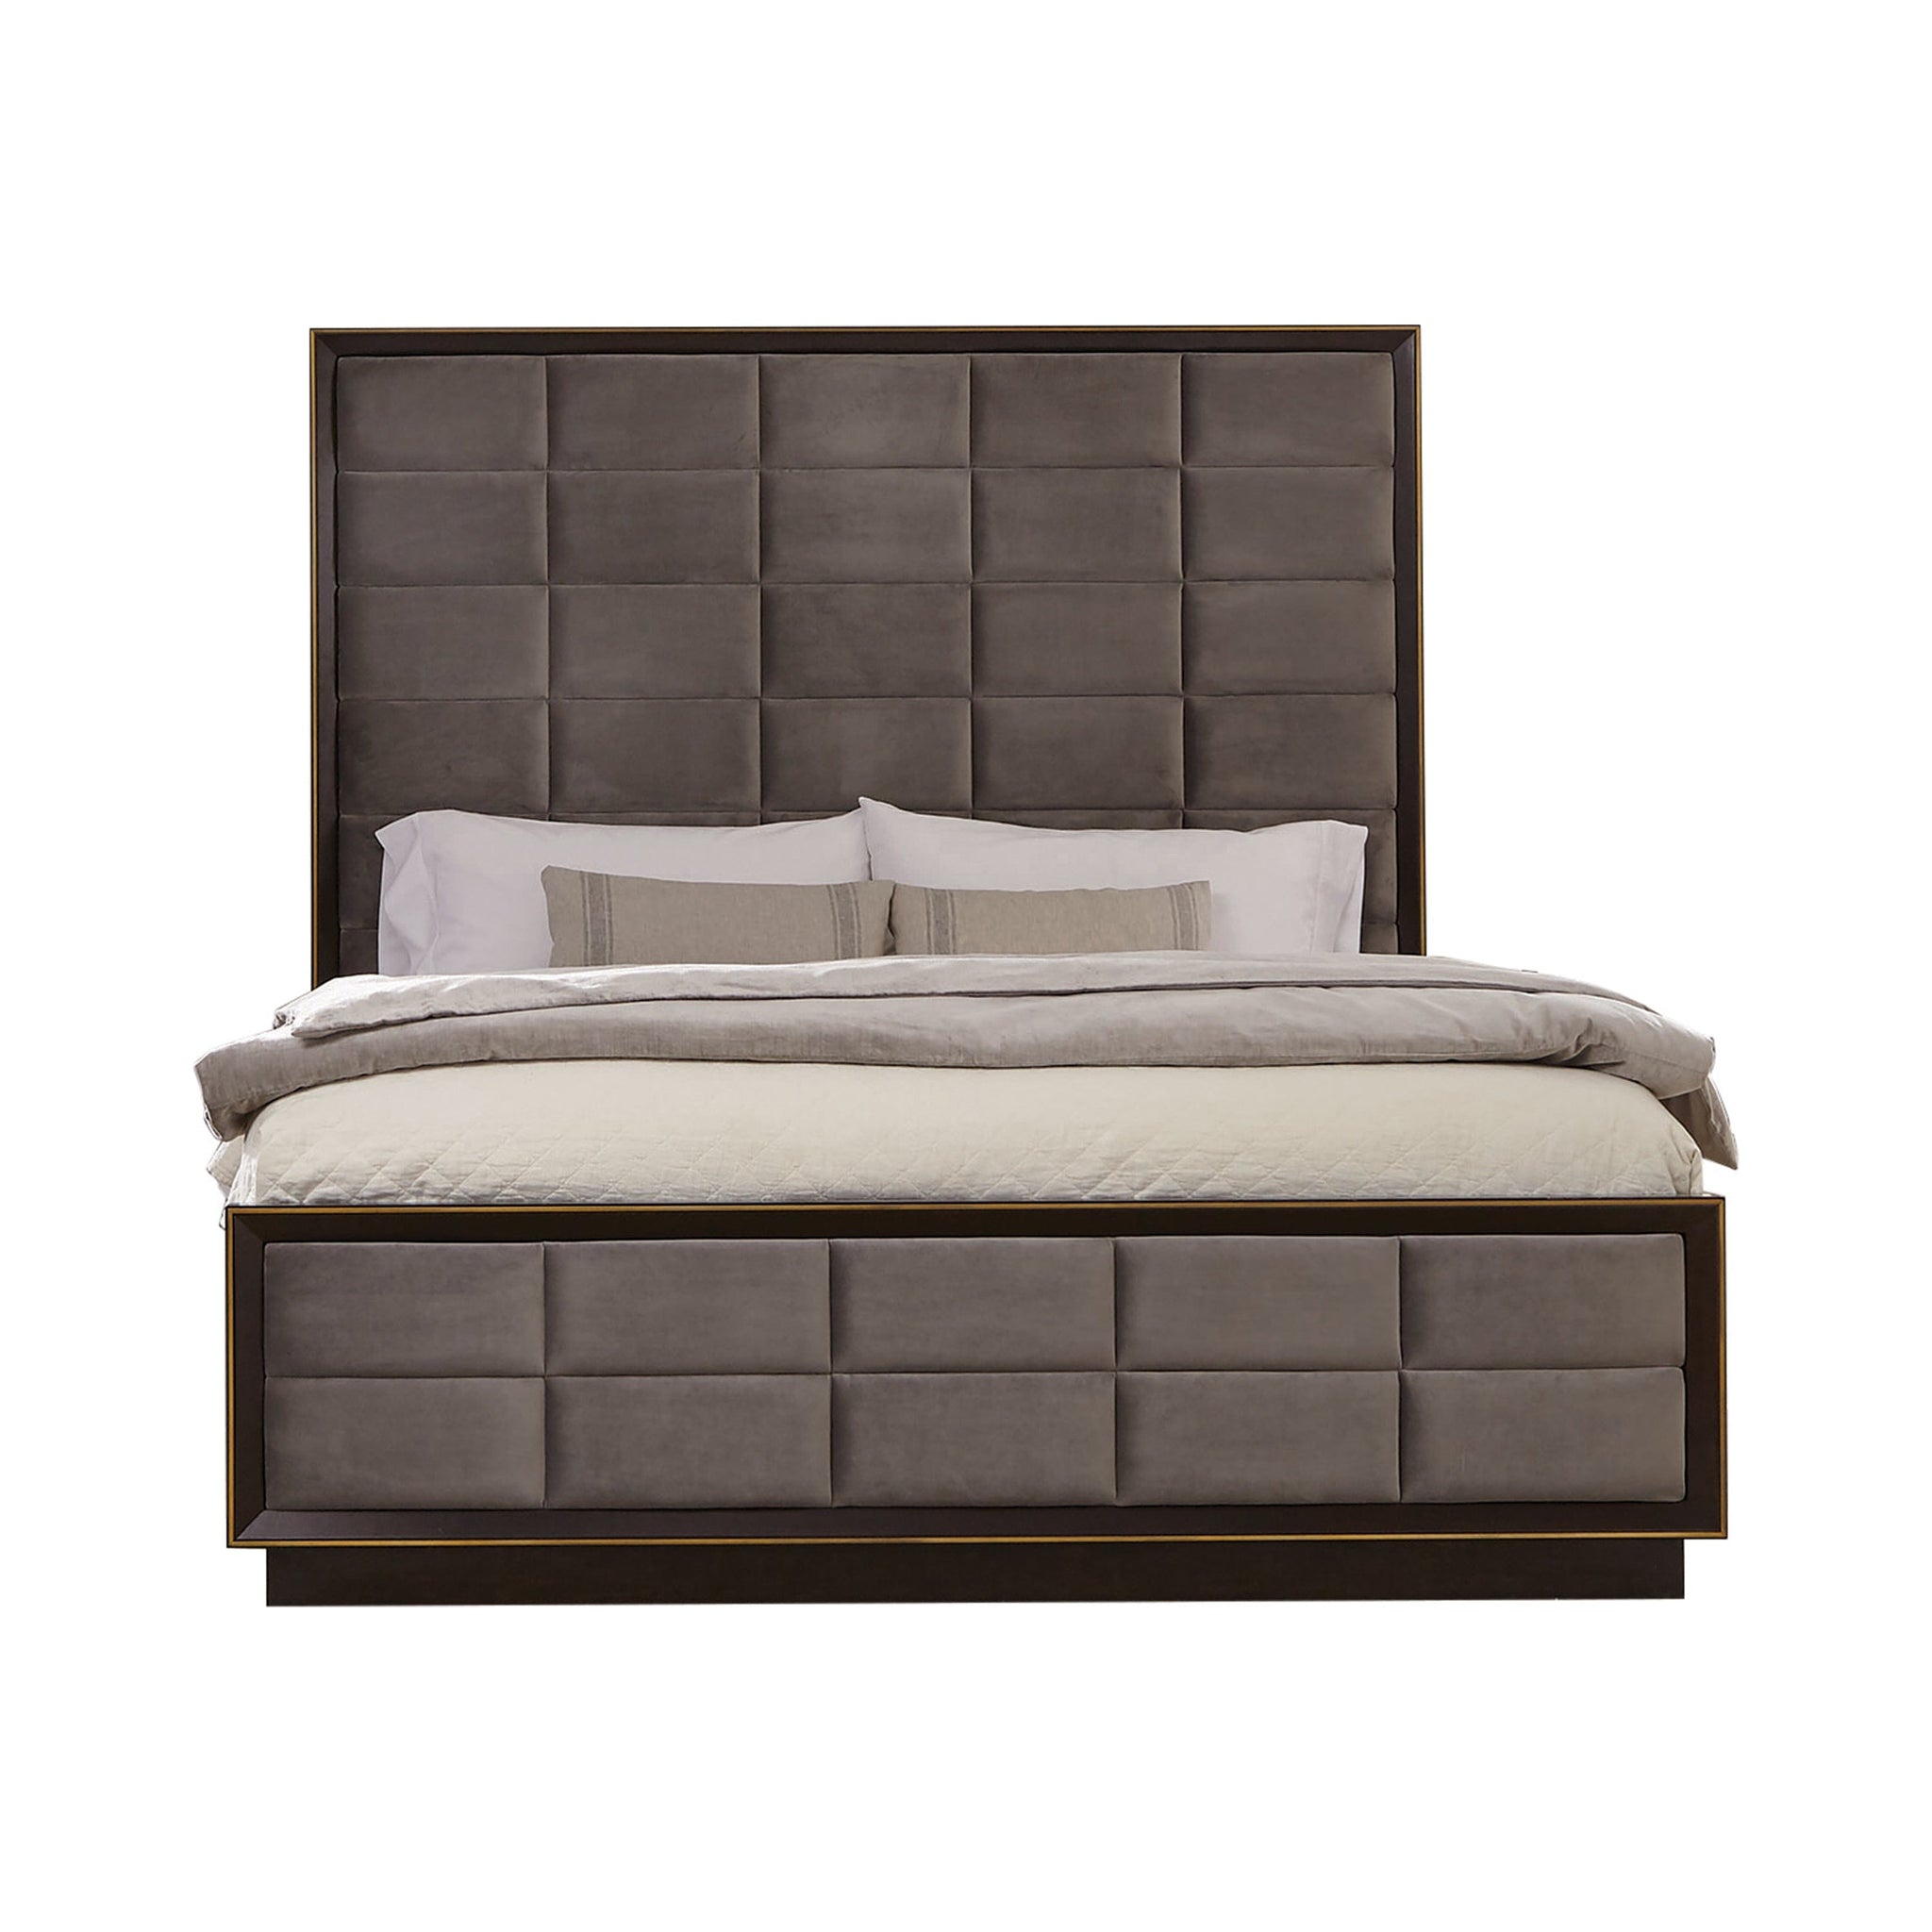 Durango California King Upholstered Bed Smoked Peppercorn And Grey Collection: Durango SKU: 223261KW